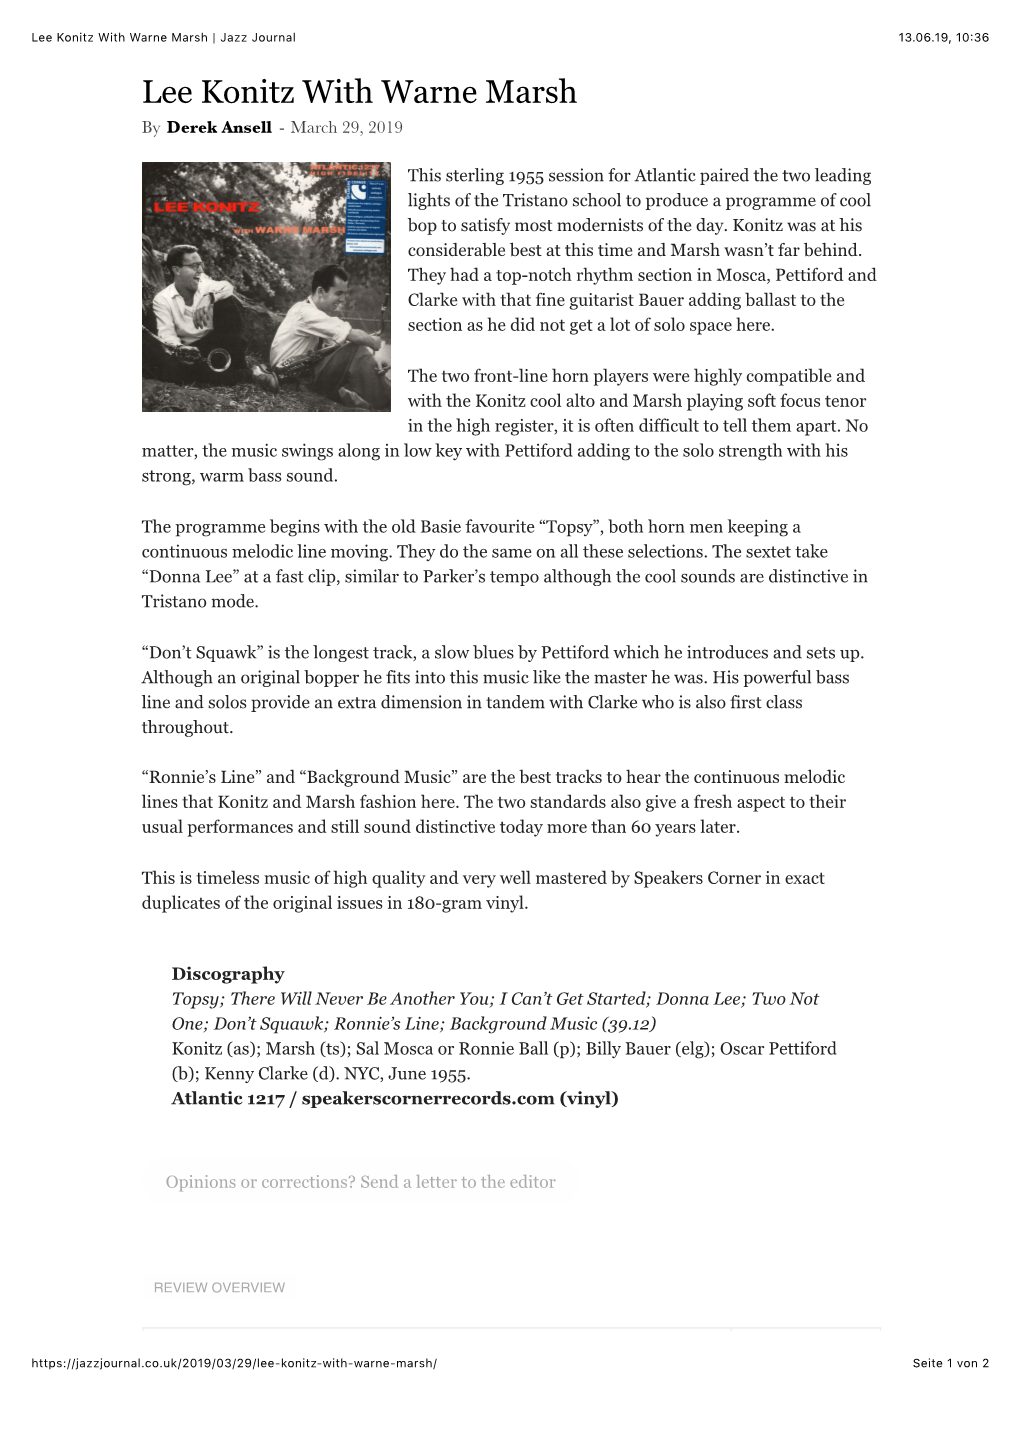 Lee Konitz with Warne Marsh | Jazz Journal 13.06.19, 10�36